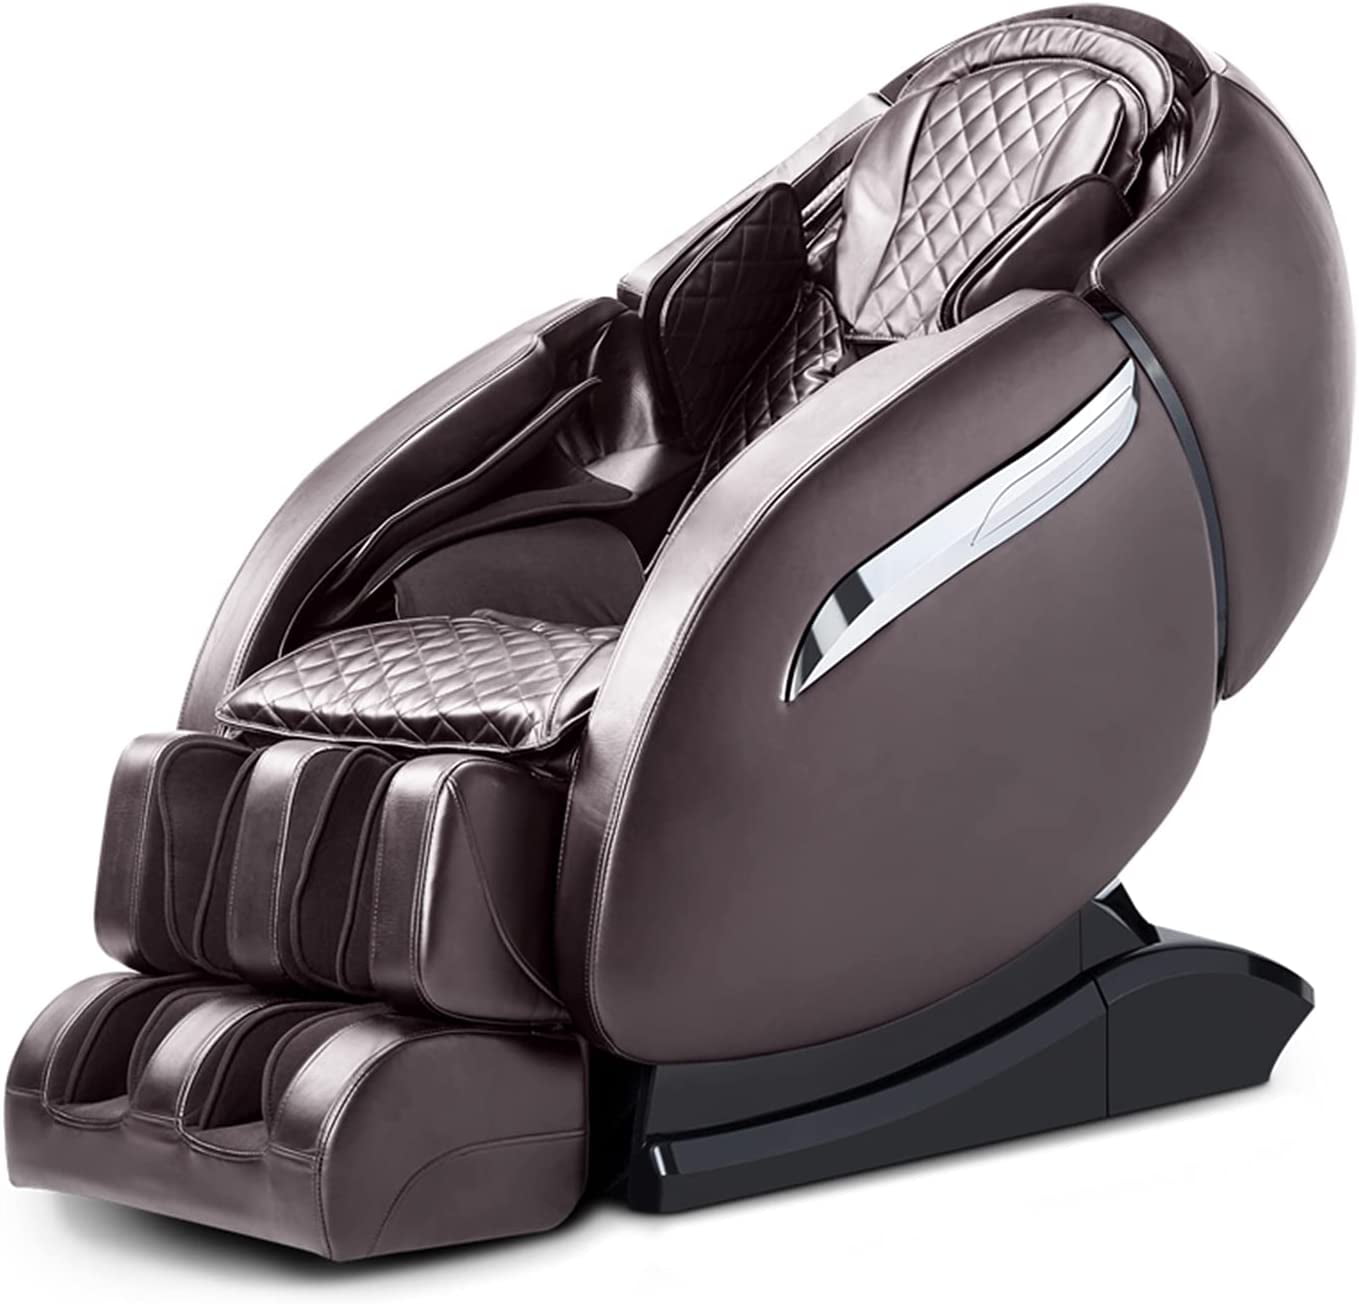 BestMassage SL-Track Massage Chair, Zero Gravity 3D Robert Hand Massage  Chairs with Heating Back, Bluetooth, Foot Roller and Air Massage System,  Brown - Walmart.com